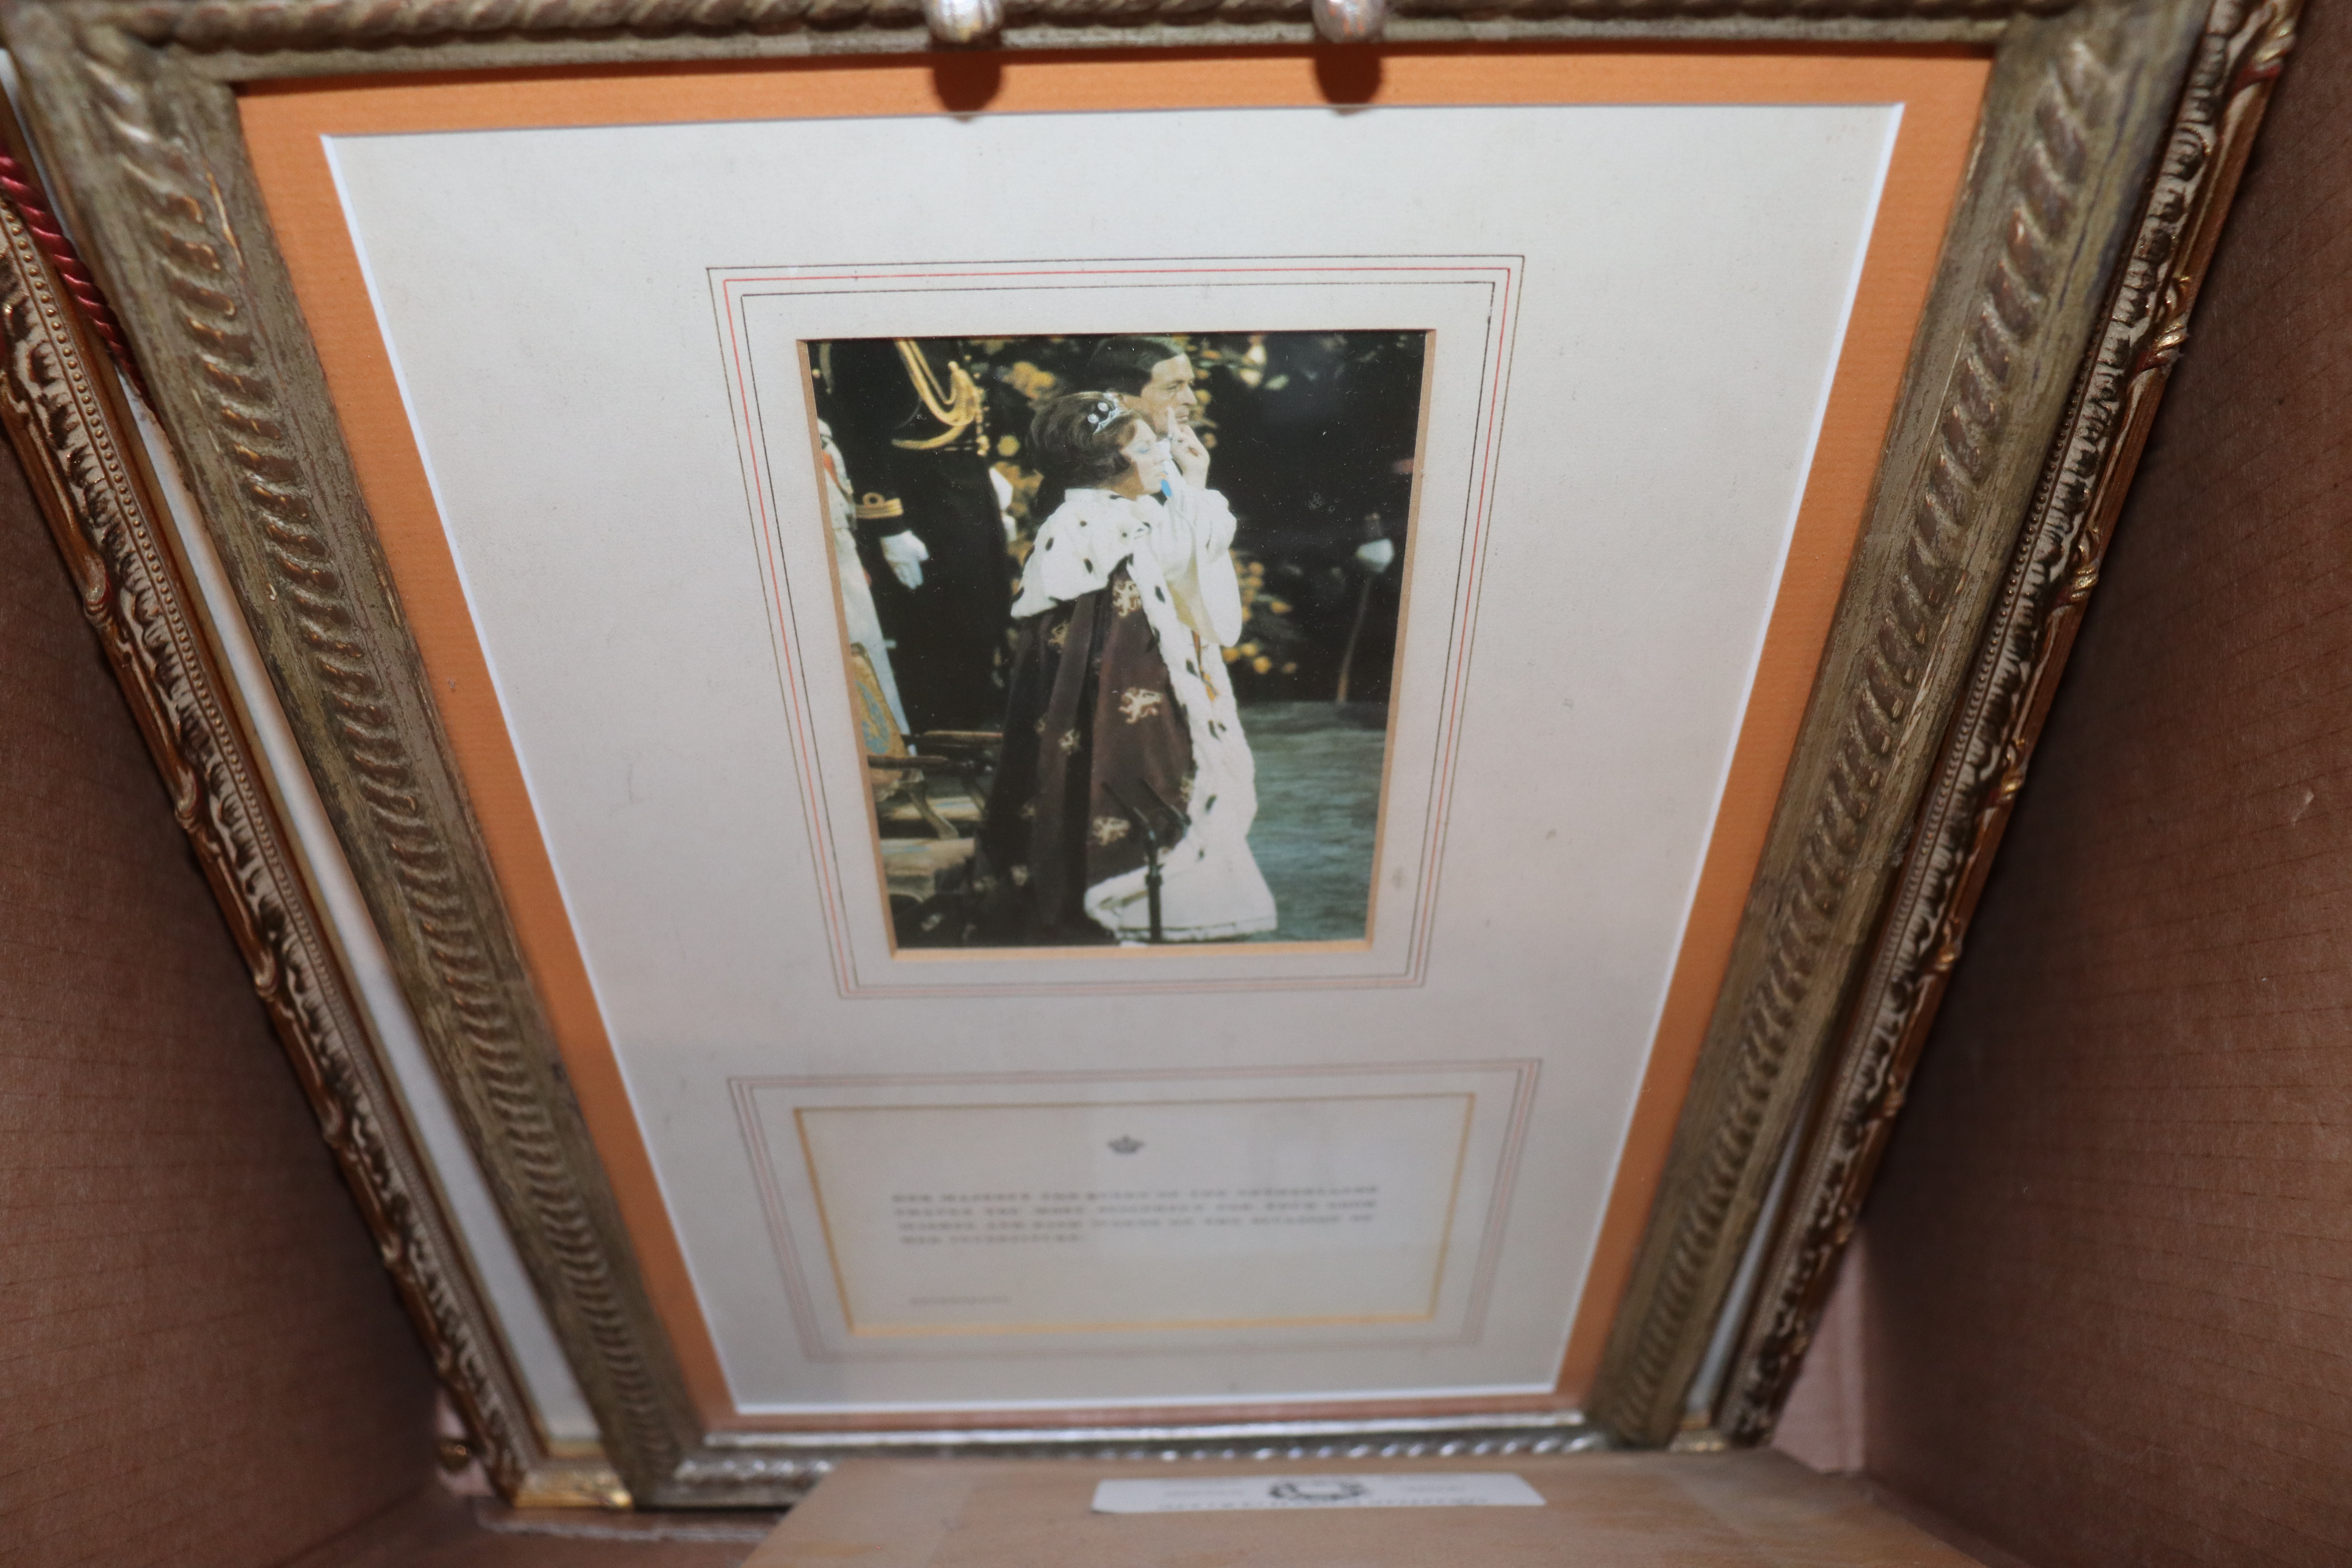 A box containing Royal Memorabilia and photos - Image 2 of 4